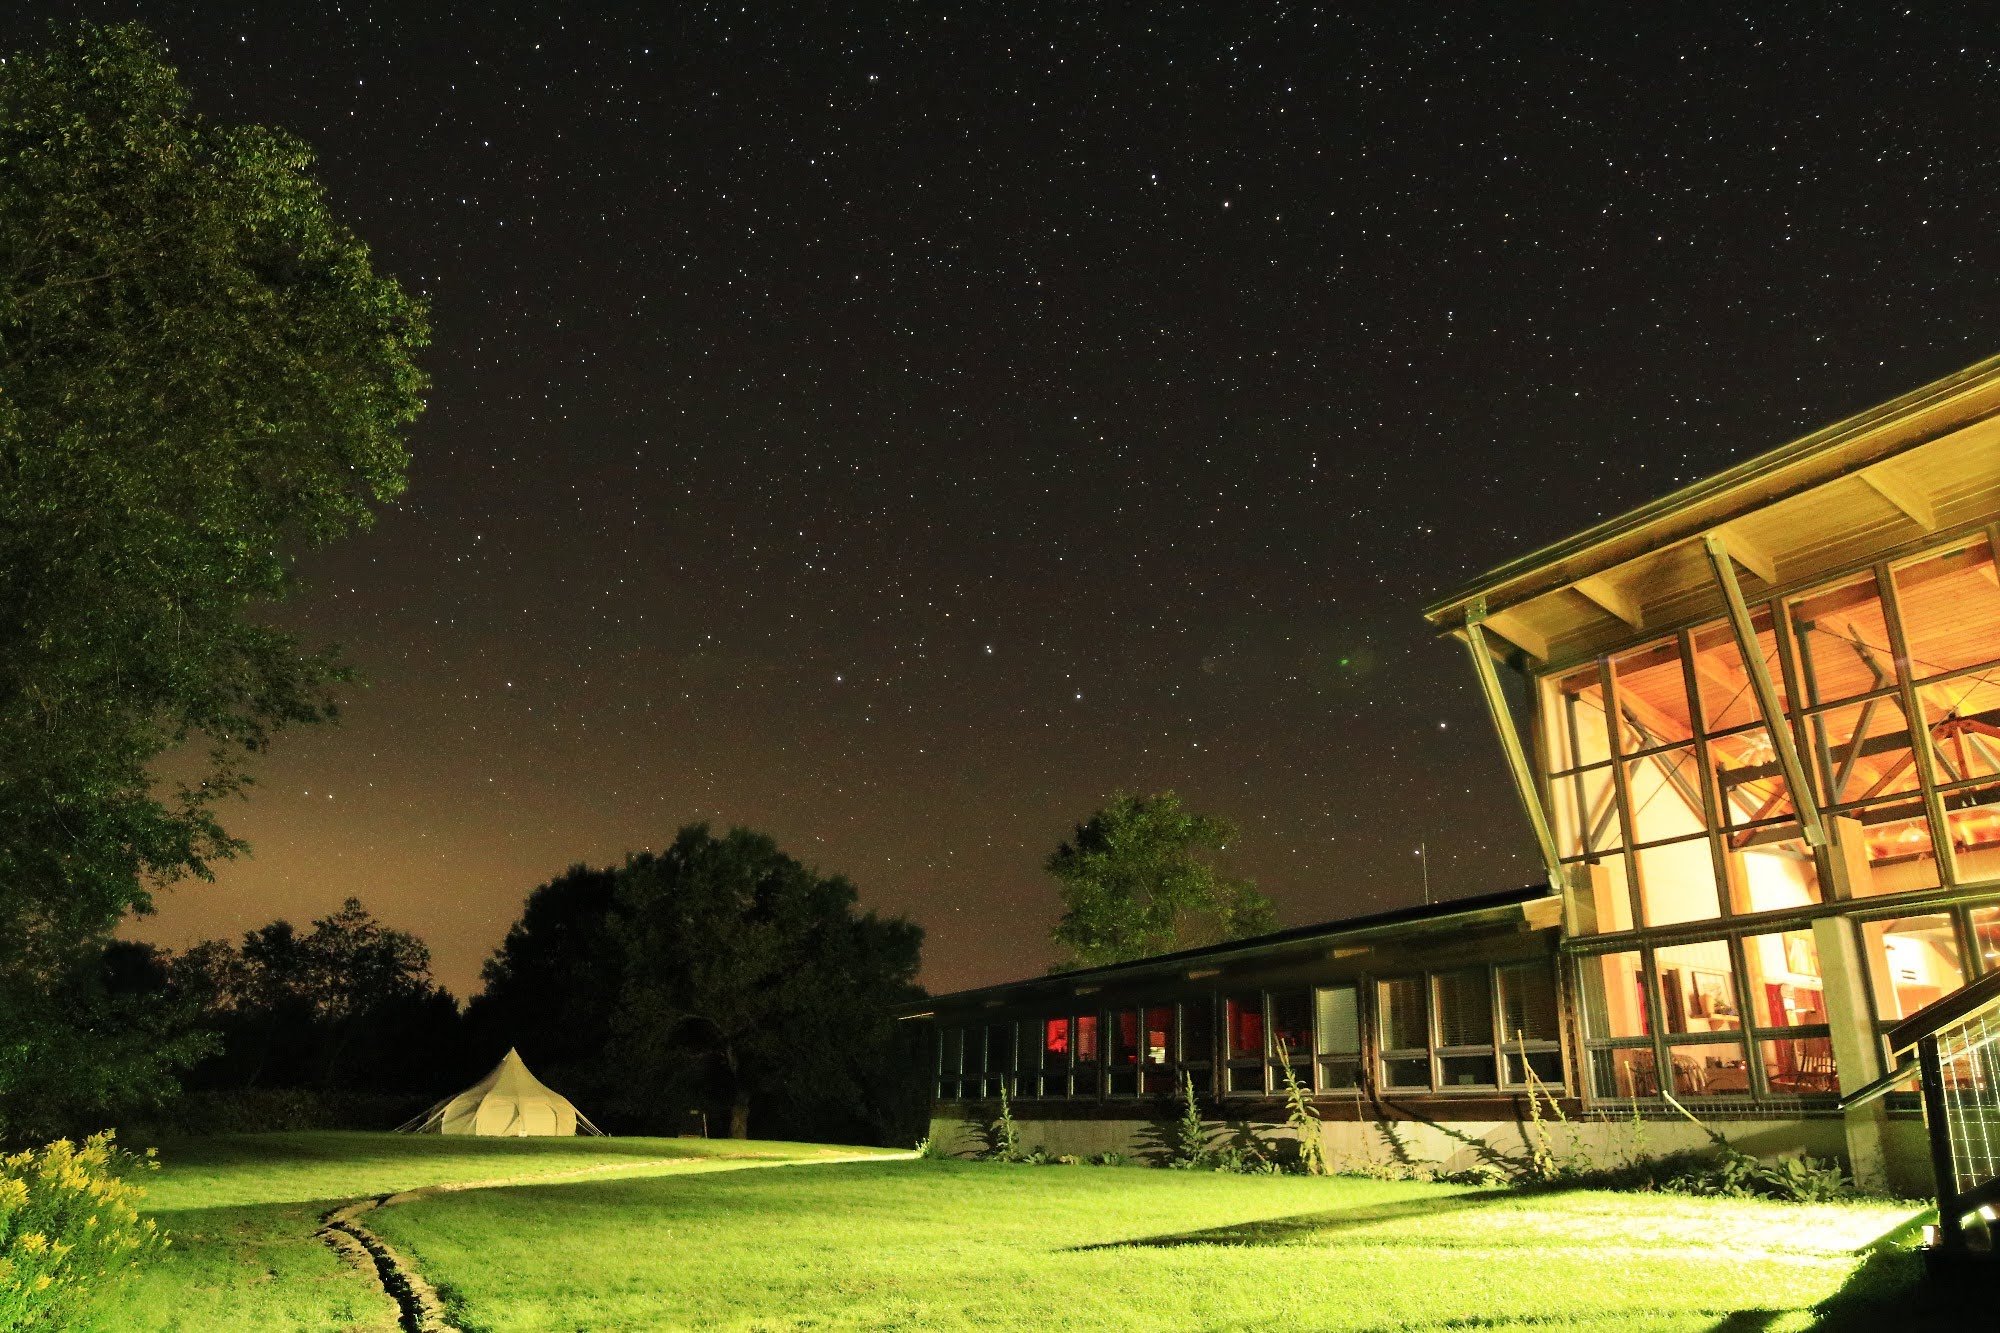  Kickapoo Valley Reserve Visitor Center under a starry sky. Photo by John Rummel  